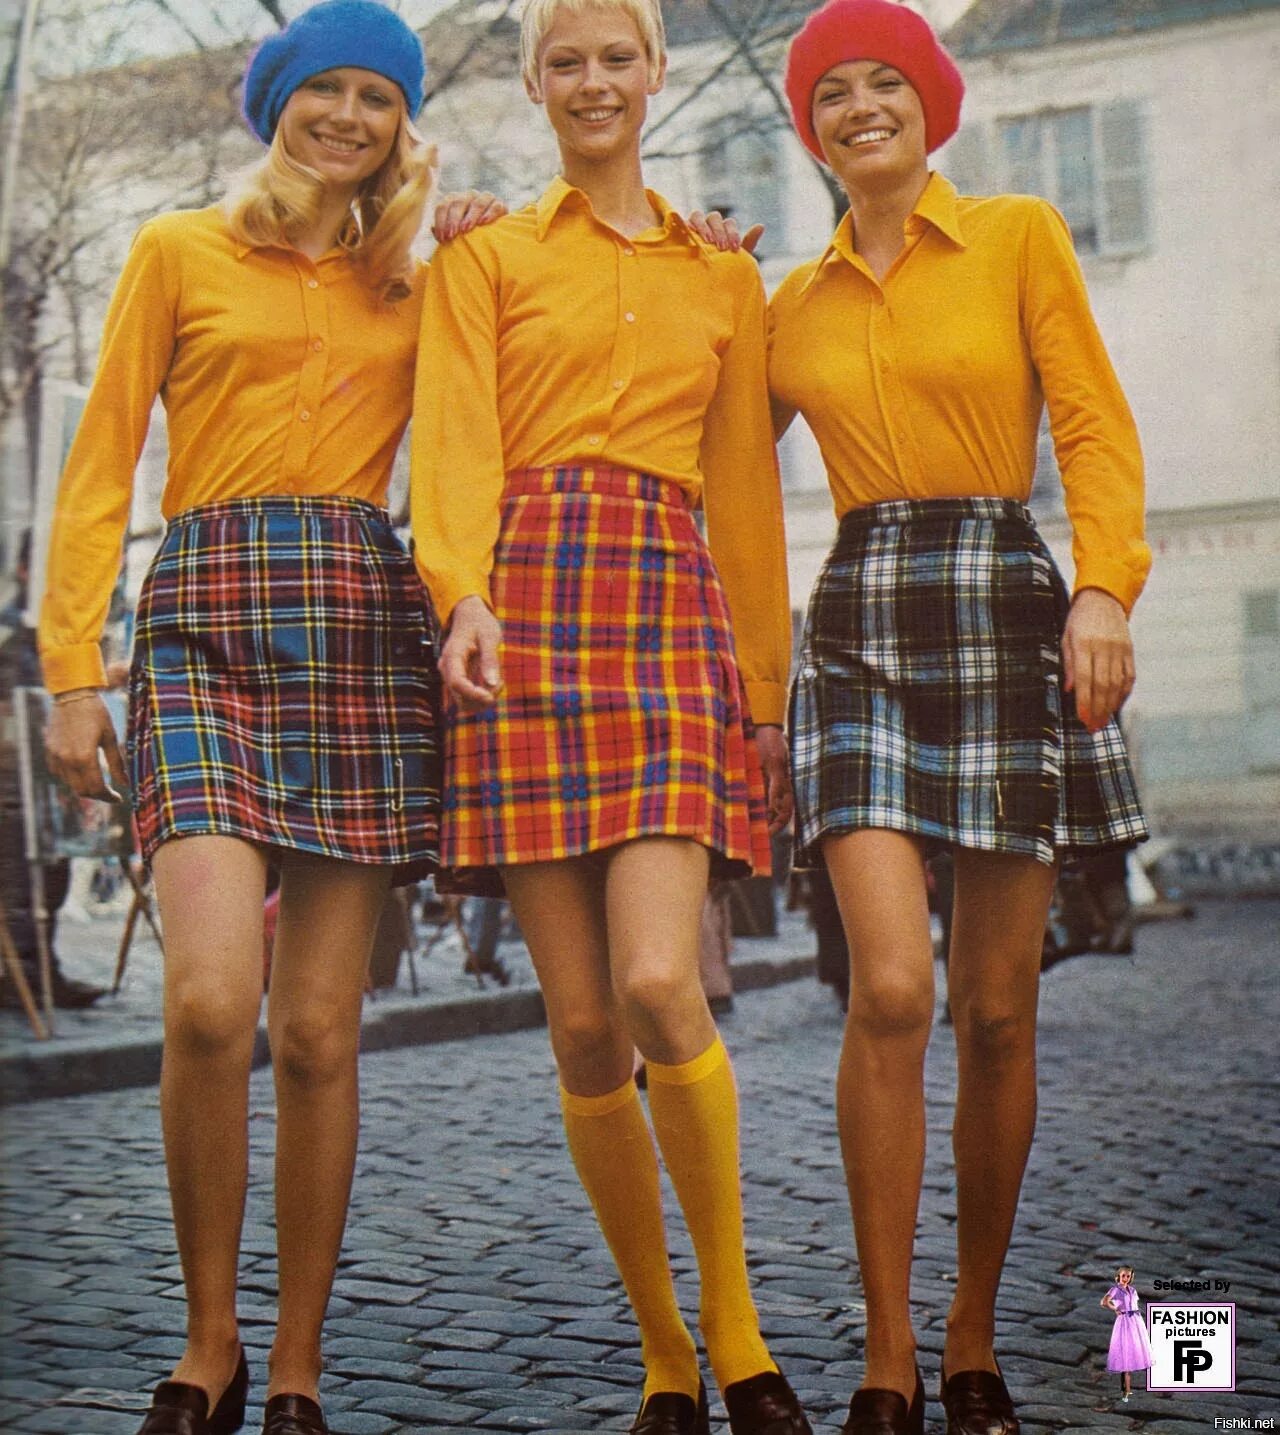 70 ые годы. 60е мода женщин Англия. Стиль 70е СССР. Женская мода 70е 80е. 70е мода Польша.